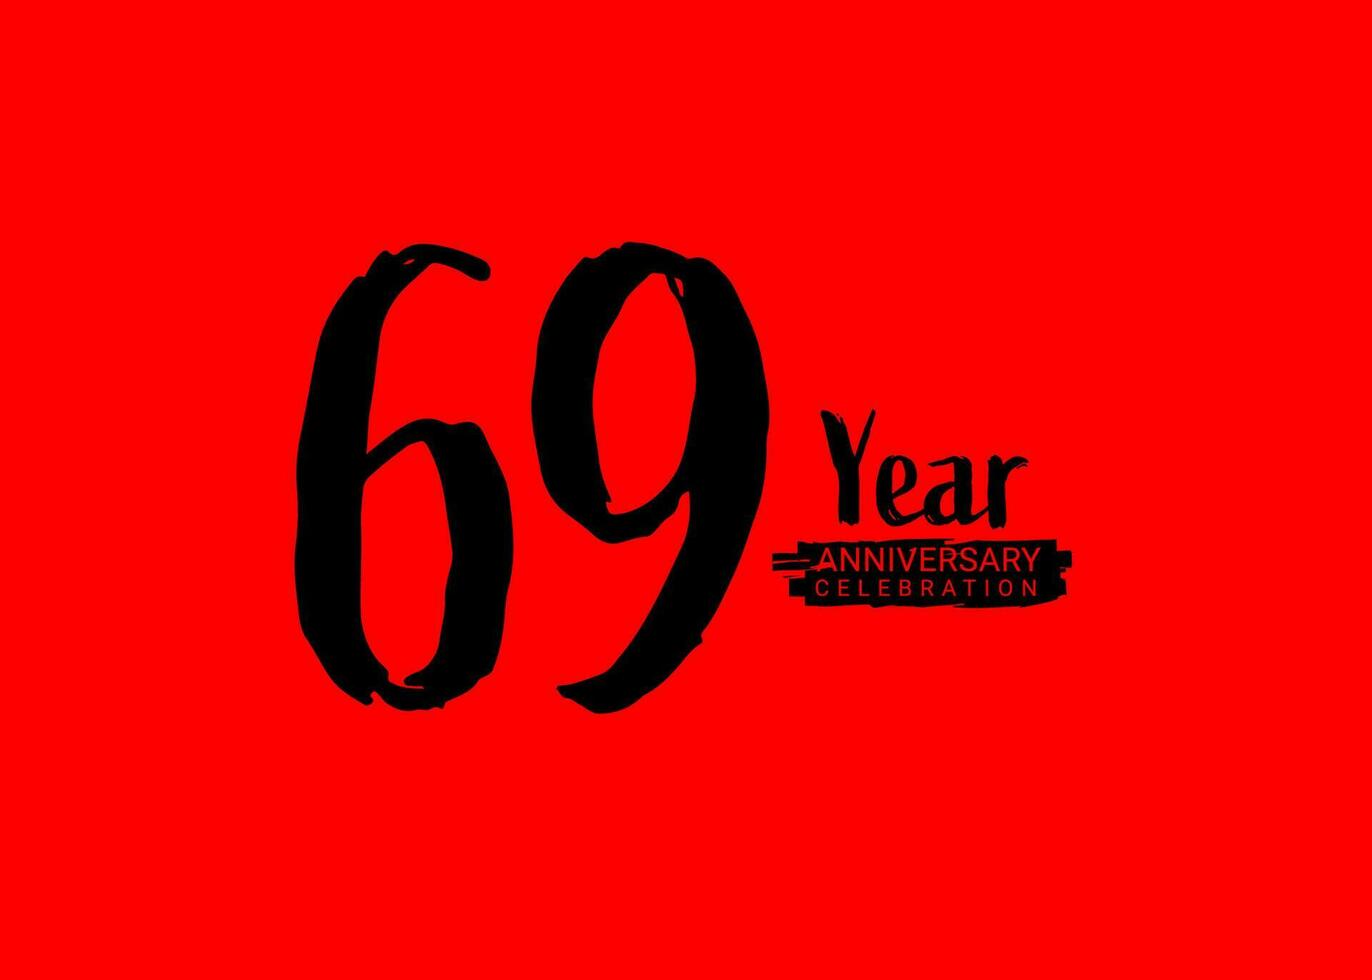 69 Years Anniversary Celebration logo on red background, 69 number logo design, 69th Birthday Logo,  logotype Anniversary, Vector Anniversary For Celebration, poster, Invitation Card